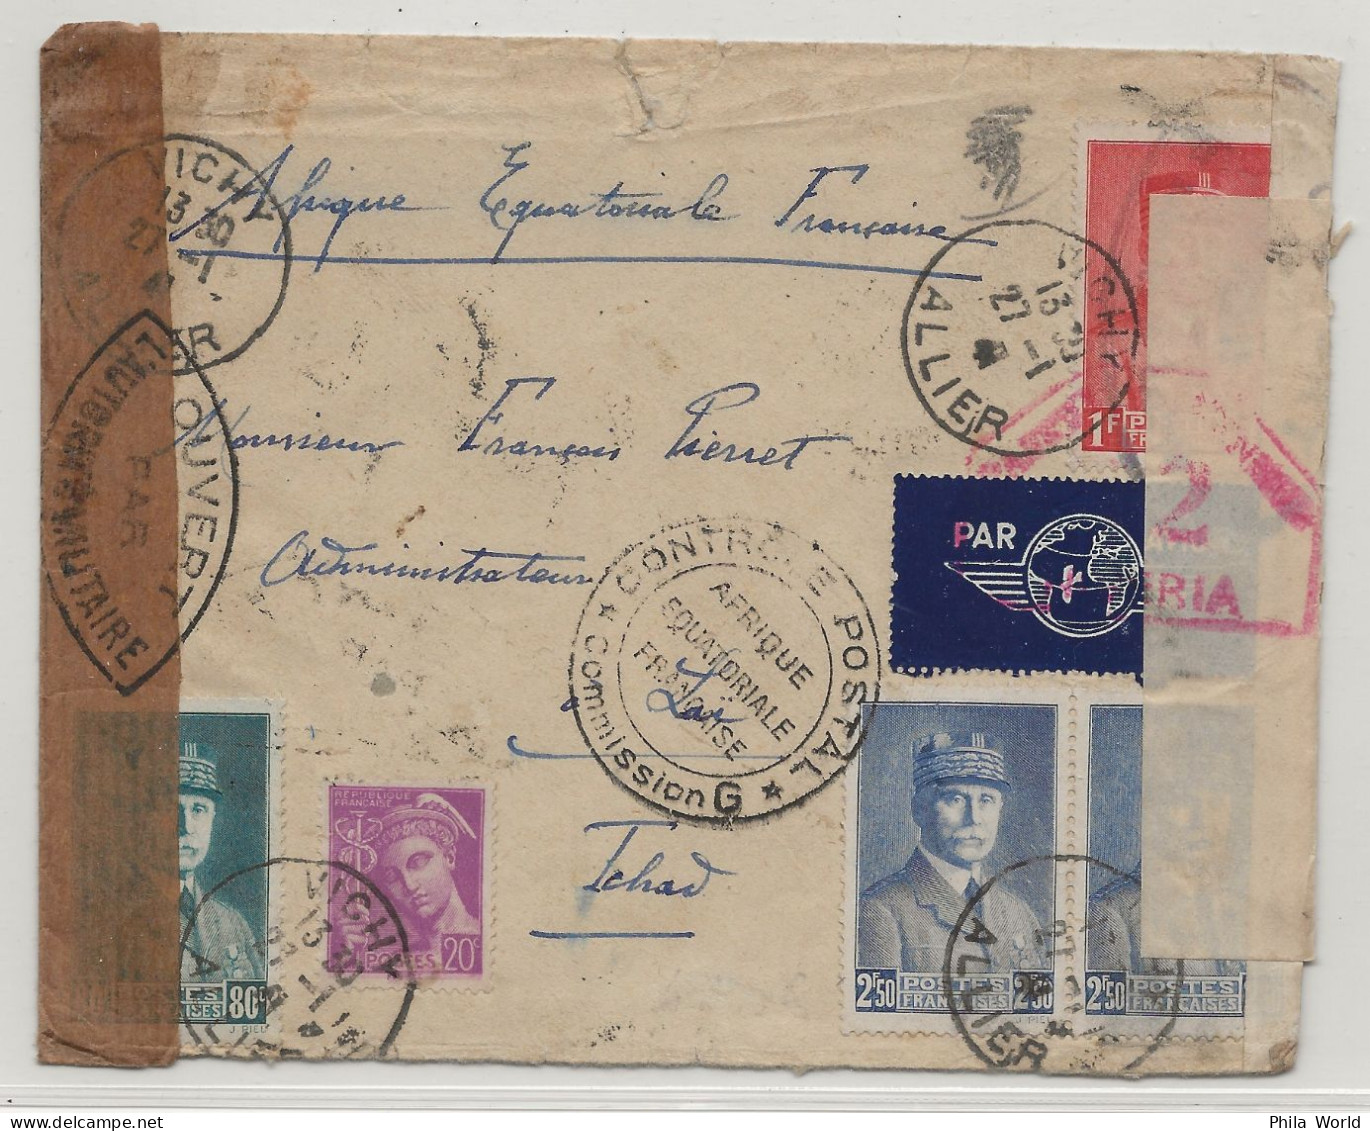 FRANCE WW2 1941 Lettre Avion VICHY Allier Aff PETAIN MERCURE > PIERRET FFL AEF Tchad Contrôle Postal Via NIGERIA Censure - Briefe U. Dokumente